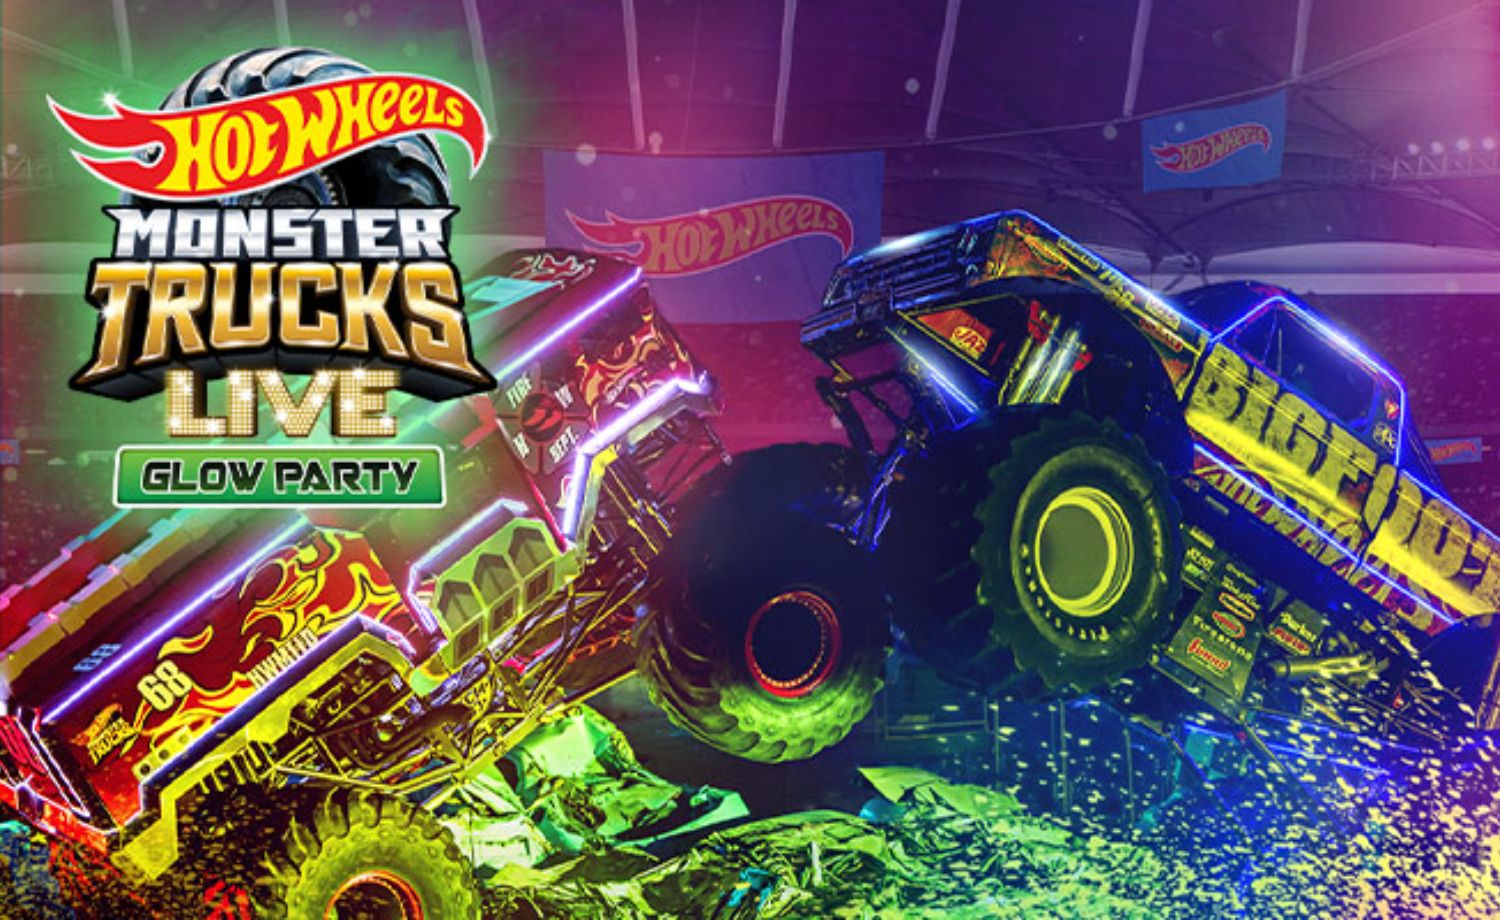 Hot Wheels Monster Truck Live Glow Party Jul 13-14